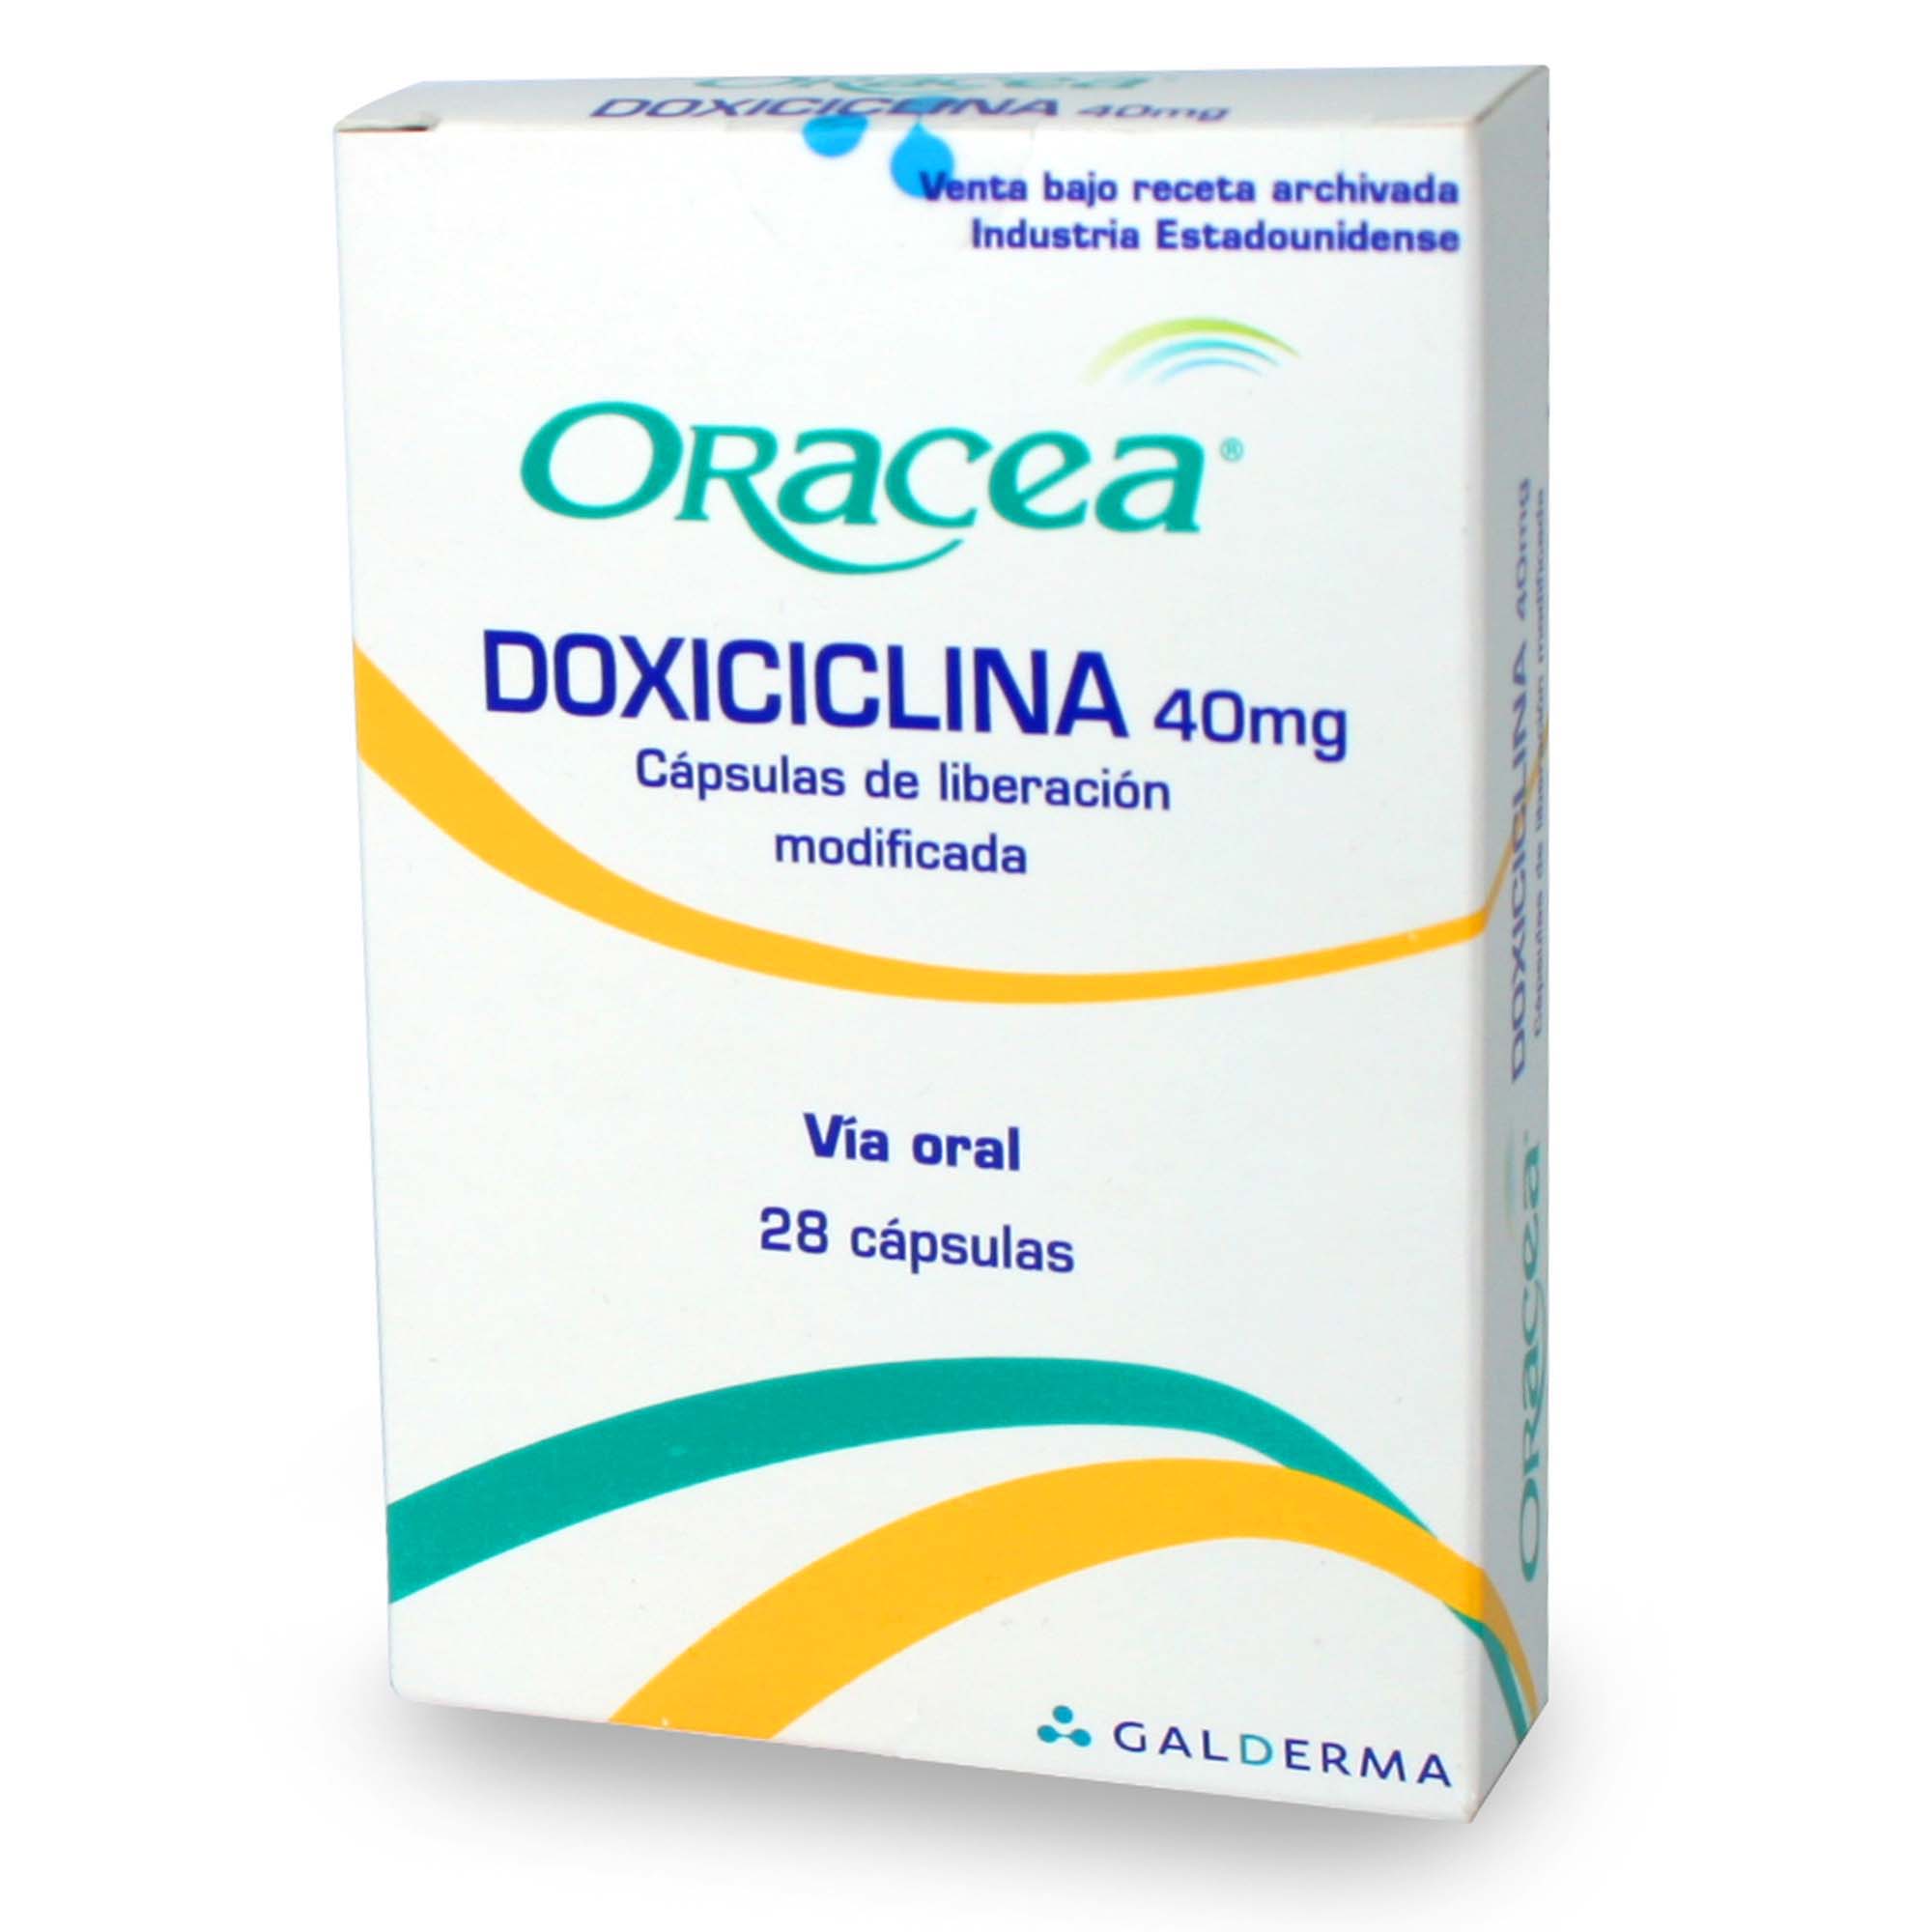 Oracea Doxiciclina 40 Mg 28 C psulas Liberaci n Prolongada Farmacias 